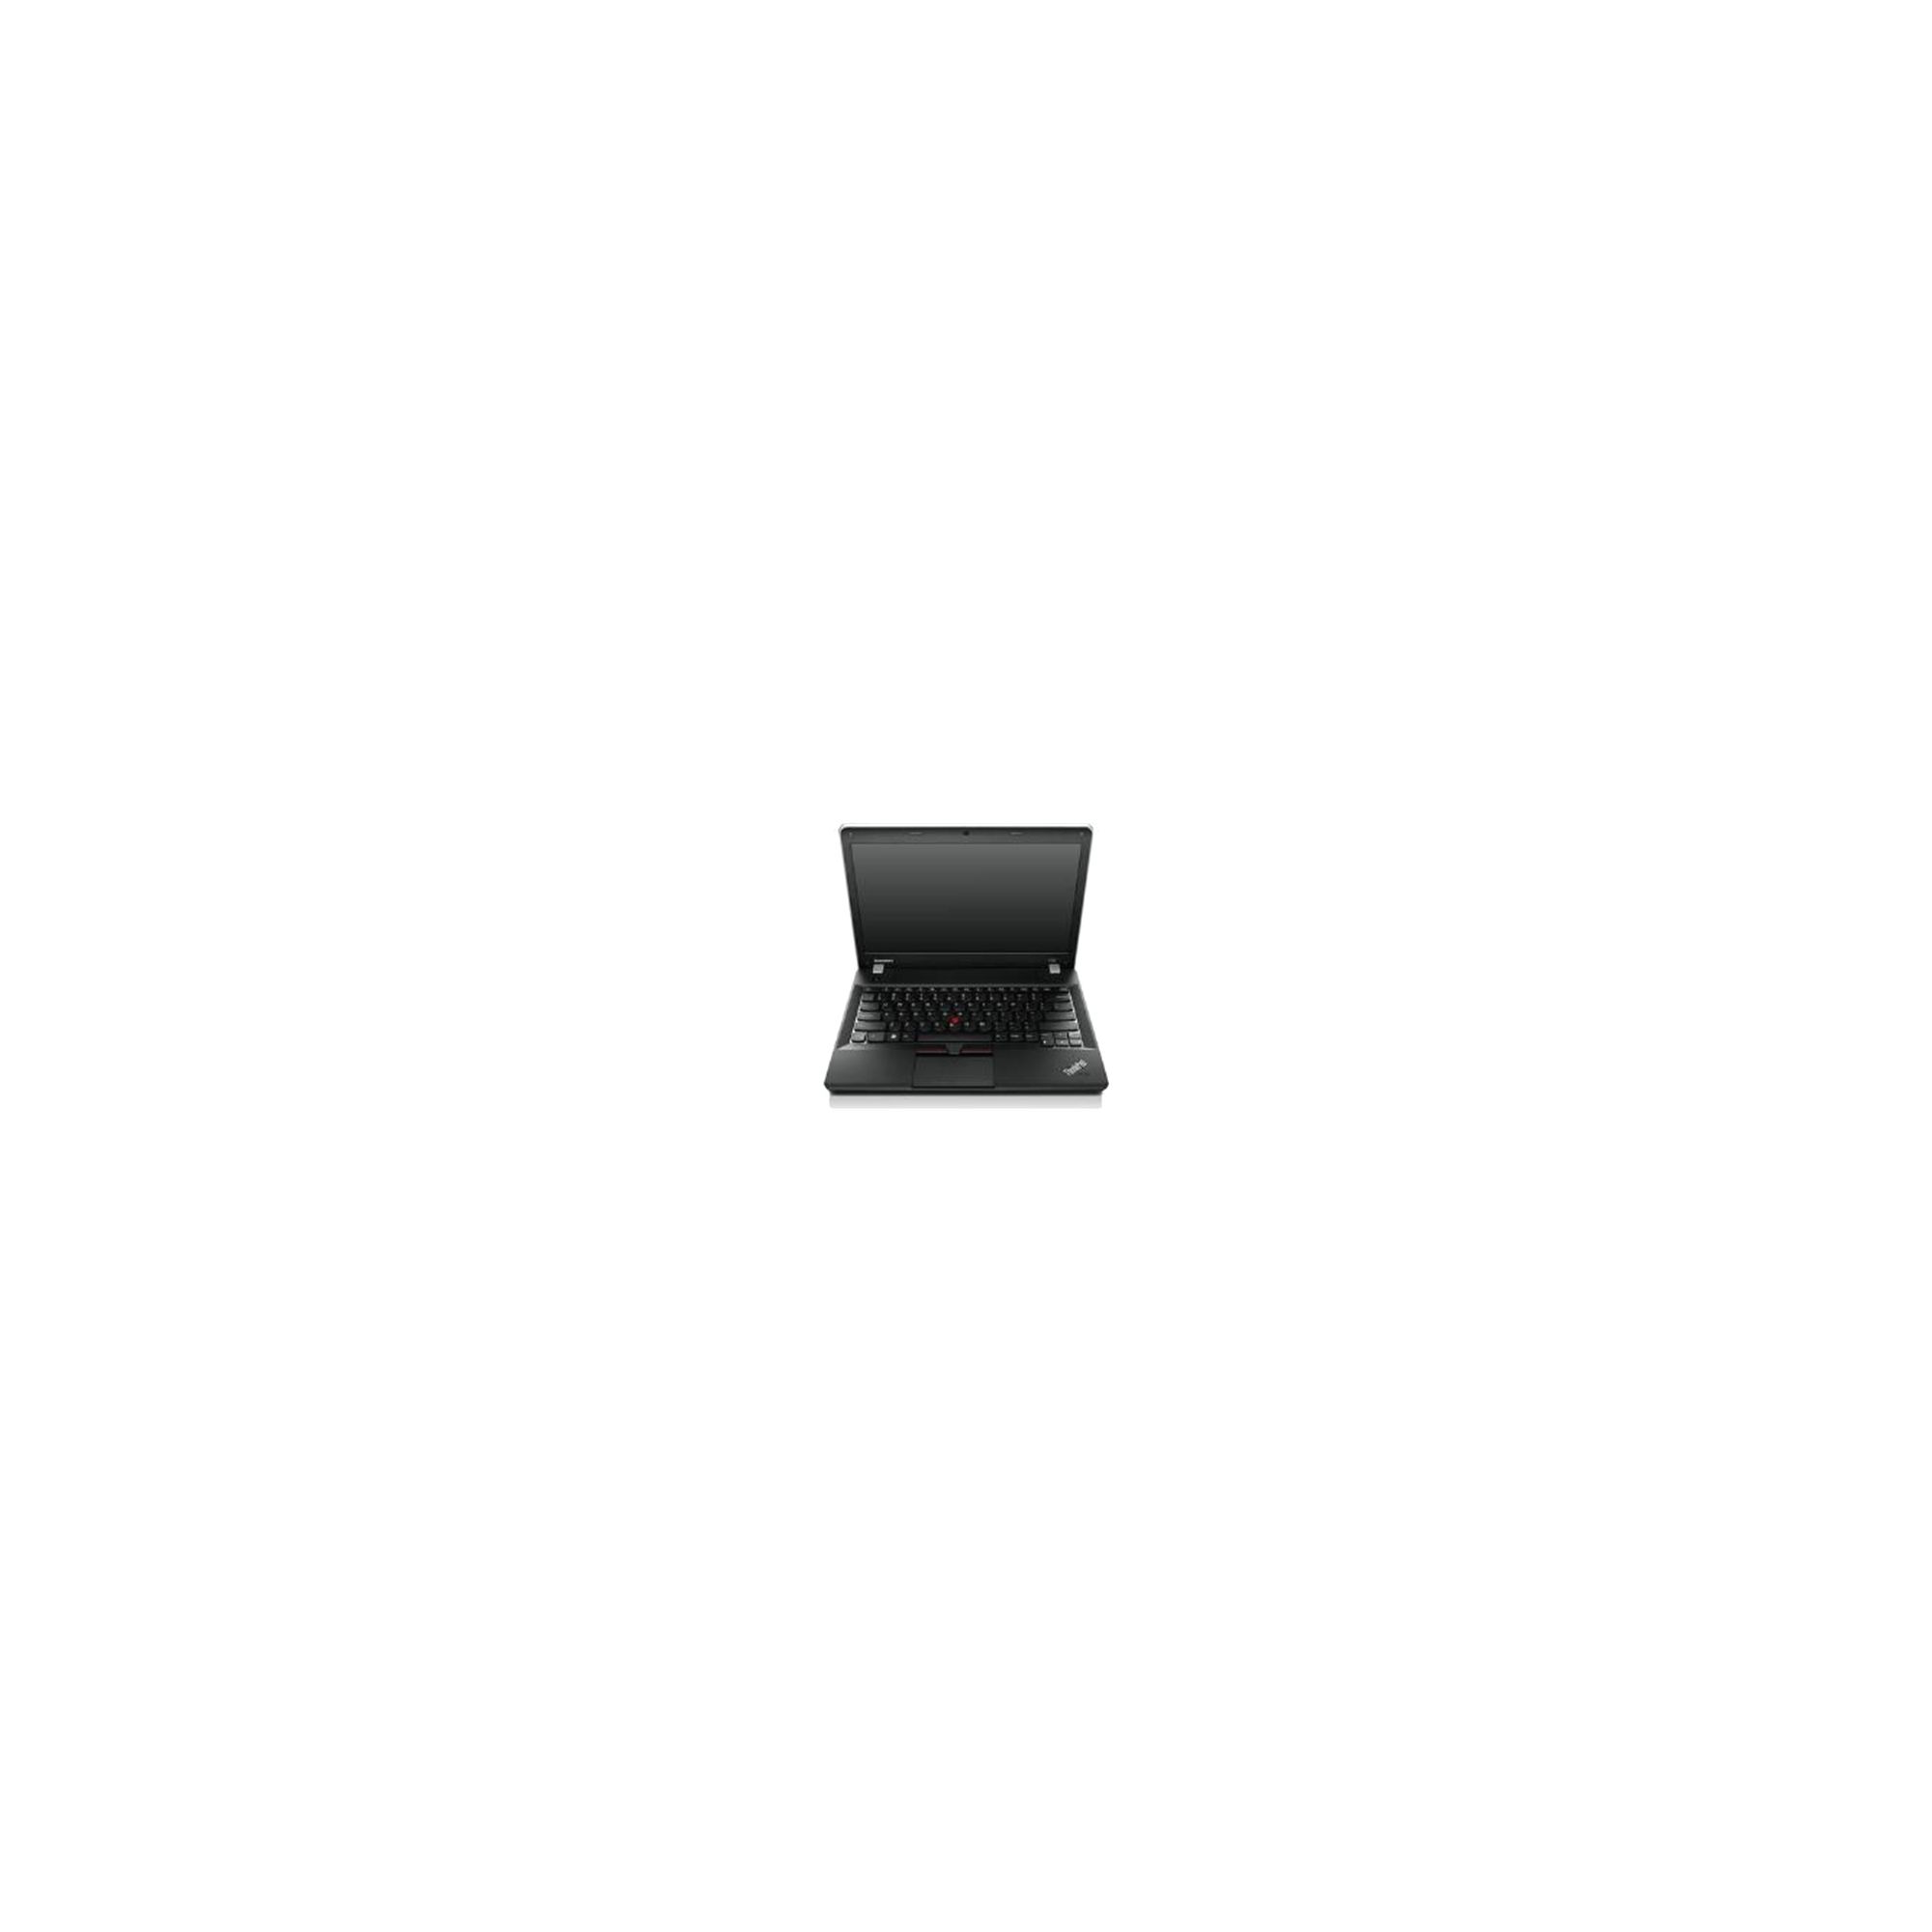 Lenovo ThinkPad Edge E335 335567G (13.3 inch) Notebook AMD (E2-1800) 1.7GHz 4GB 320GB WLAN BT Webcam Windows 8 Pro 64-bit (AMD Radeon HD7340) Black at Tescos Direct